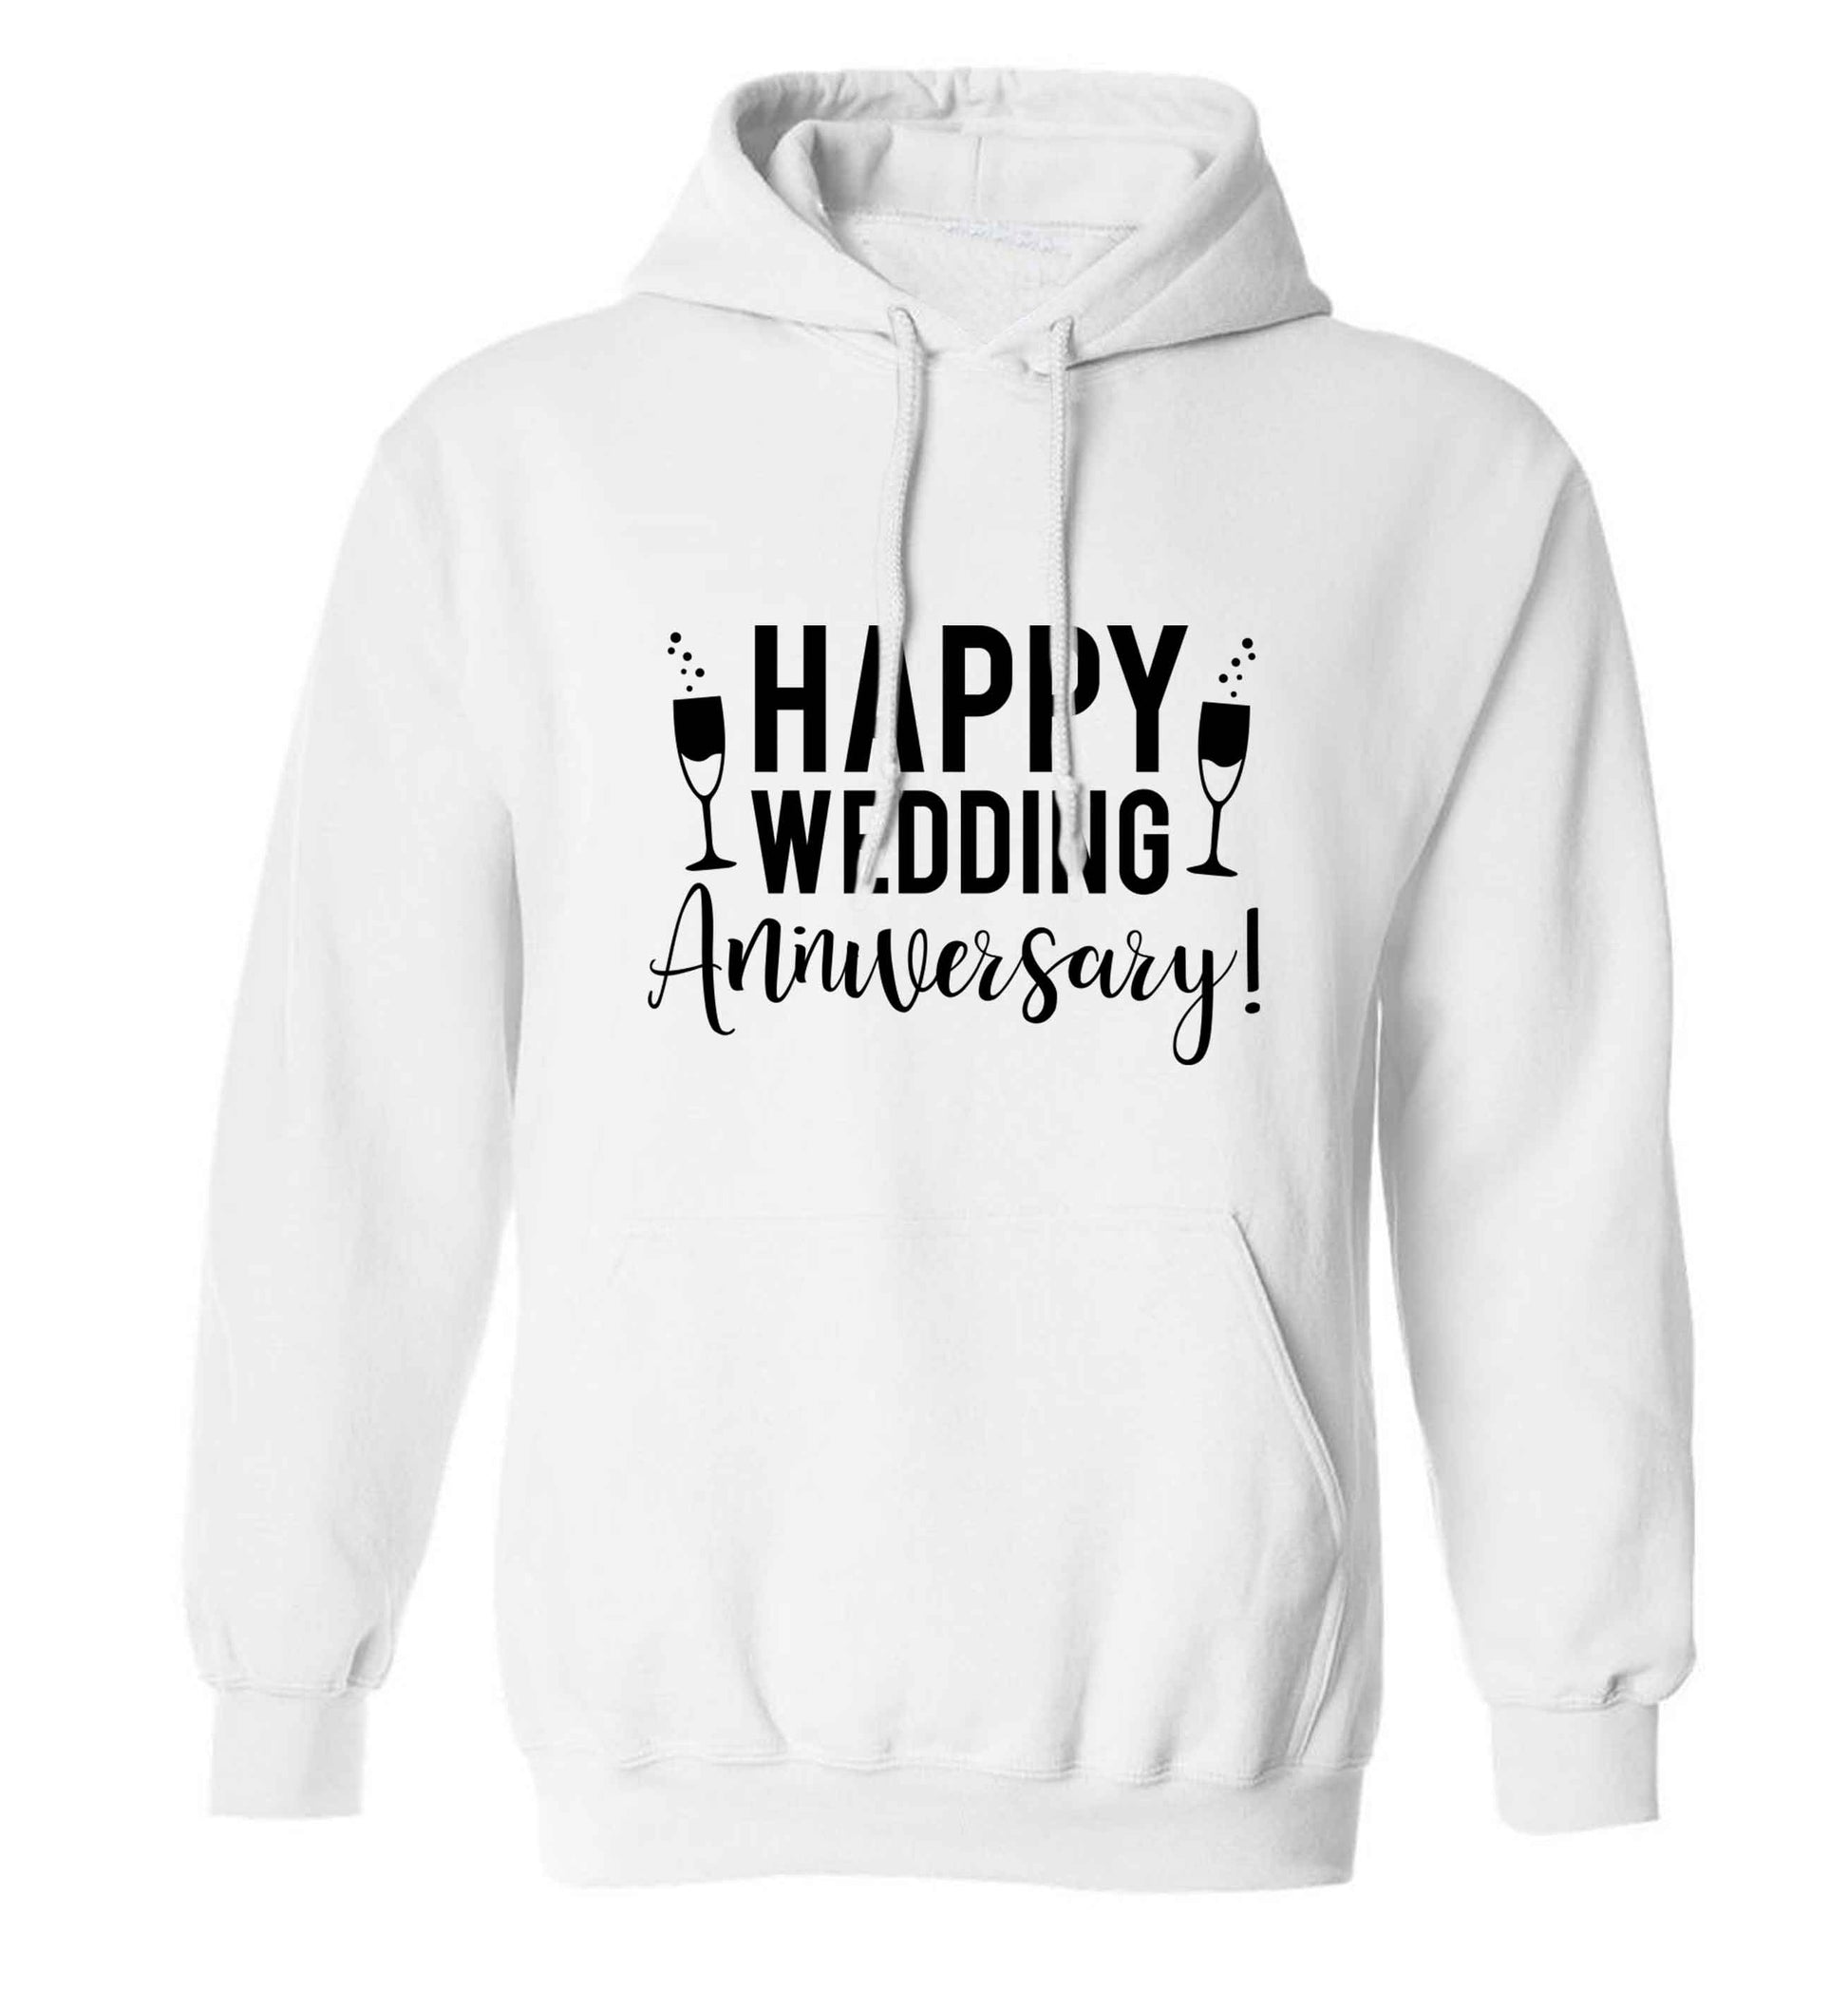 Happy wedding anniversary! adults unisex white hoodie 2XL